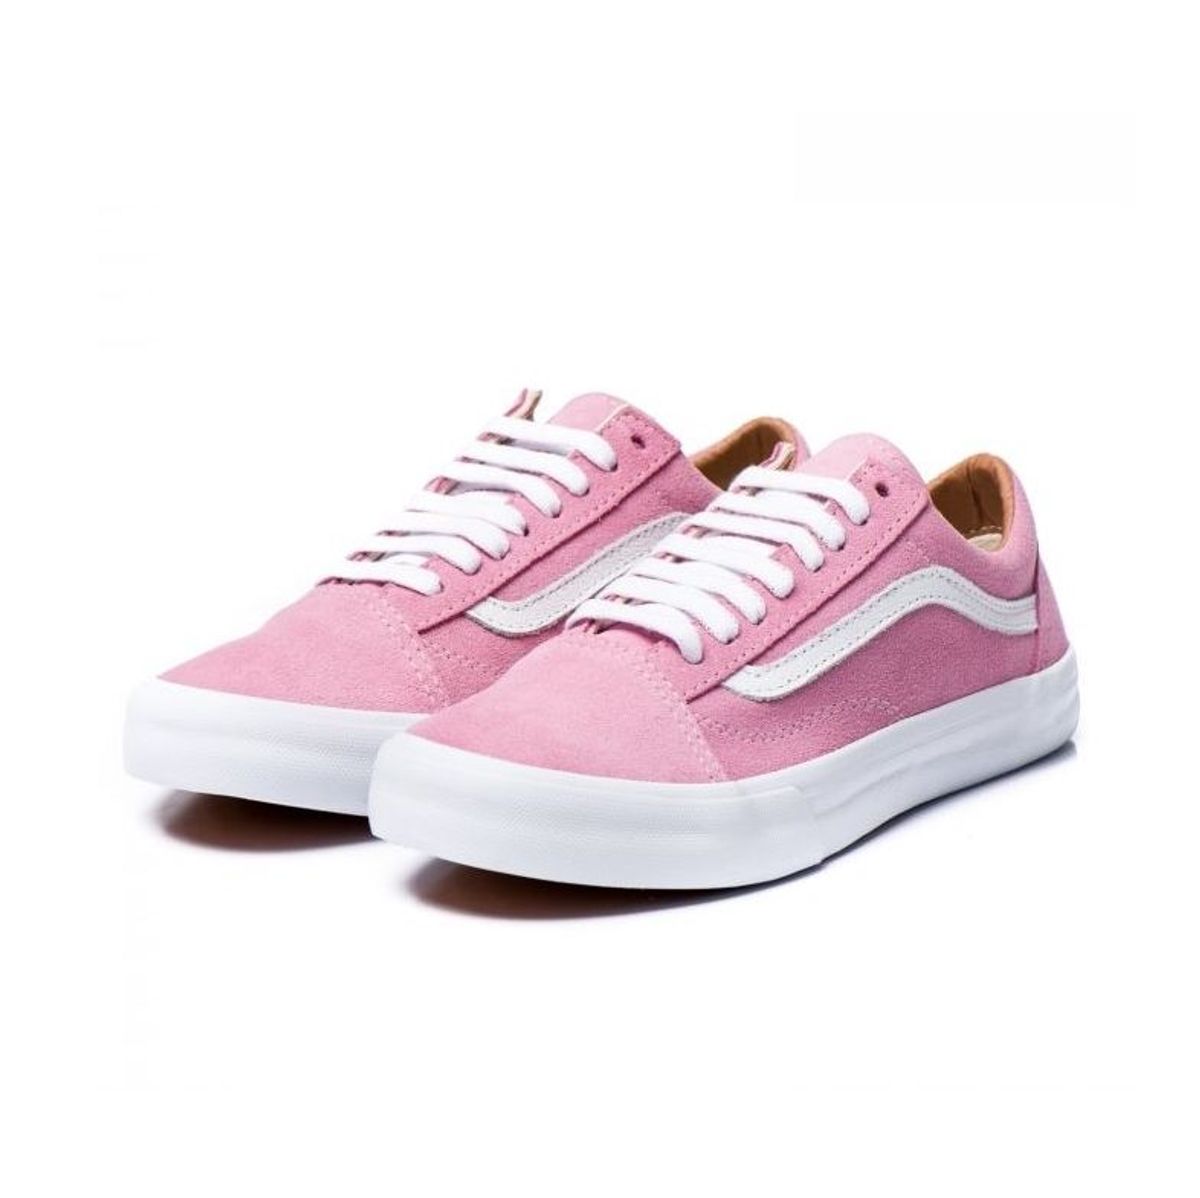 tenis vans branco e rosa